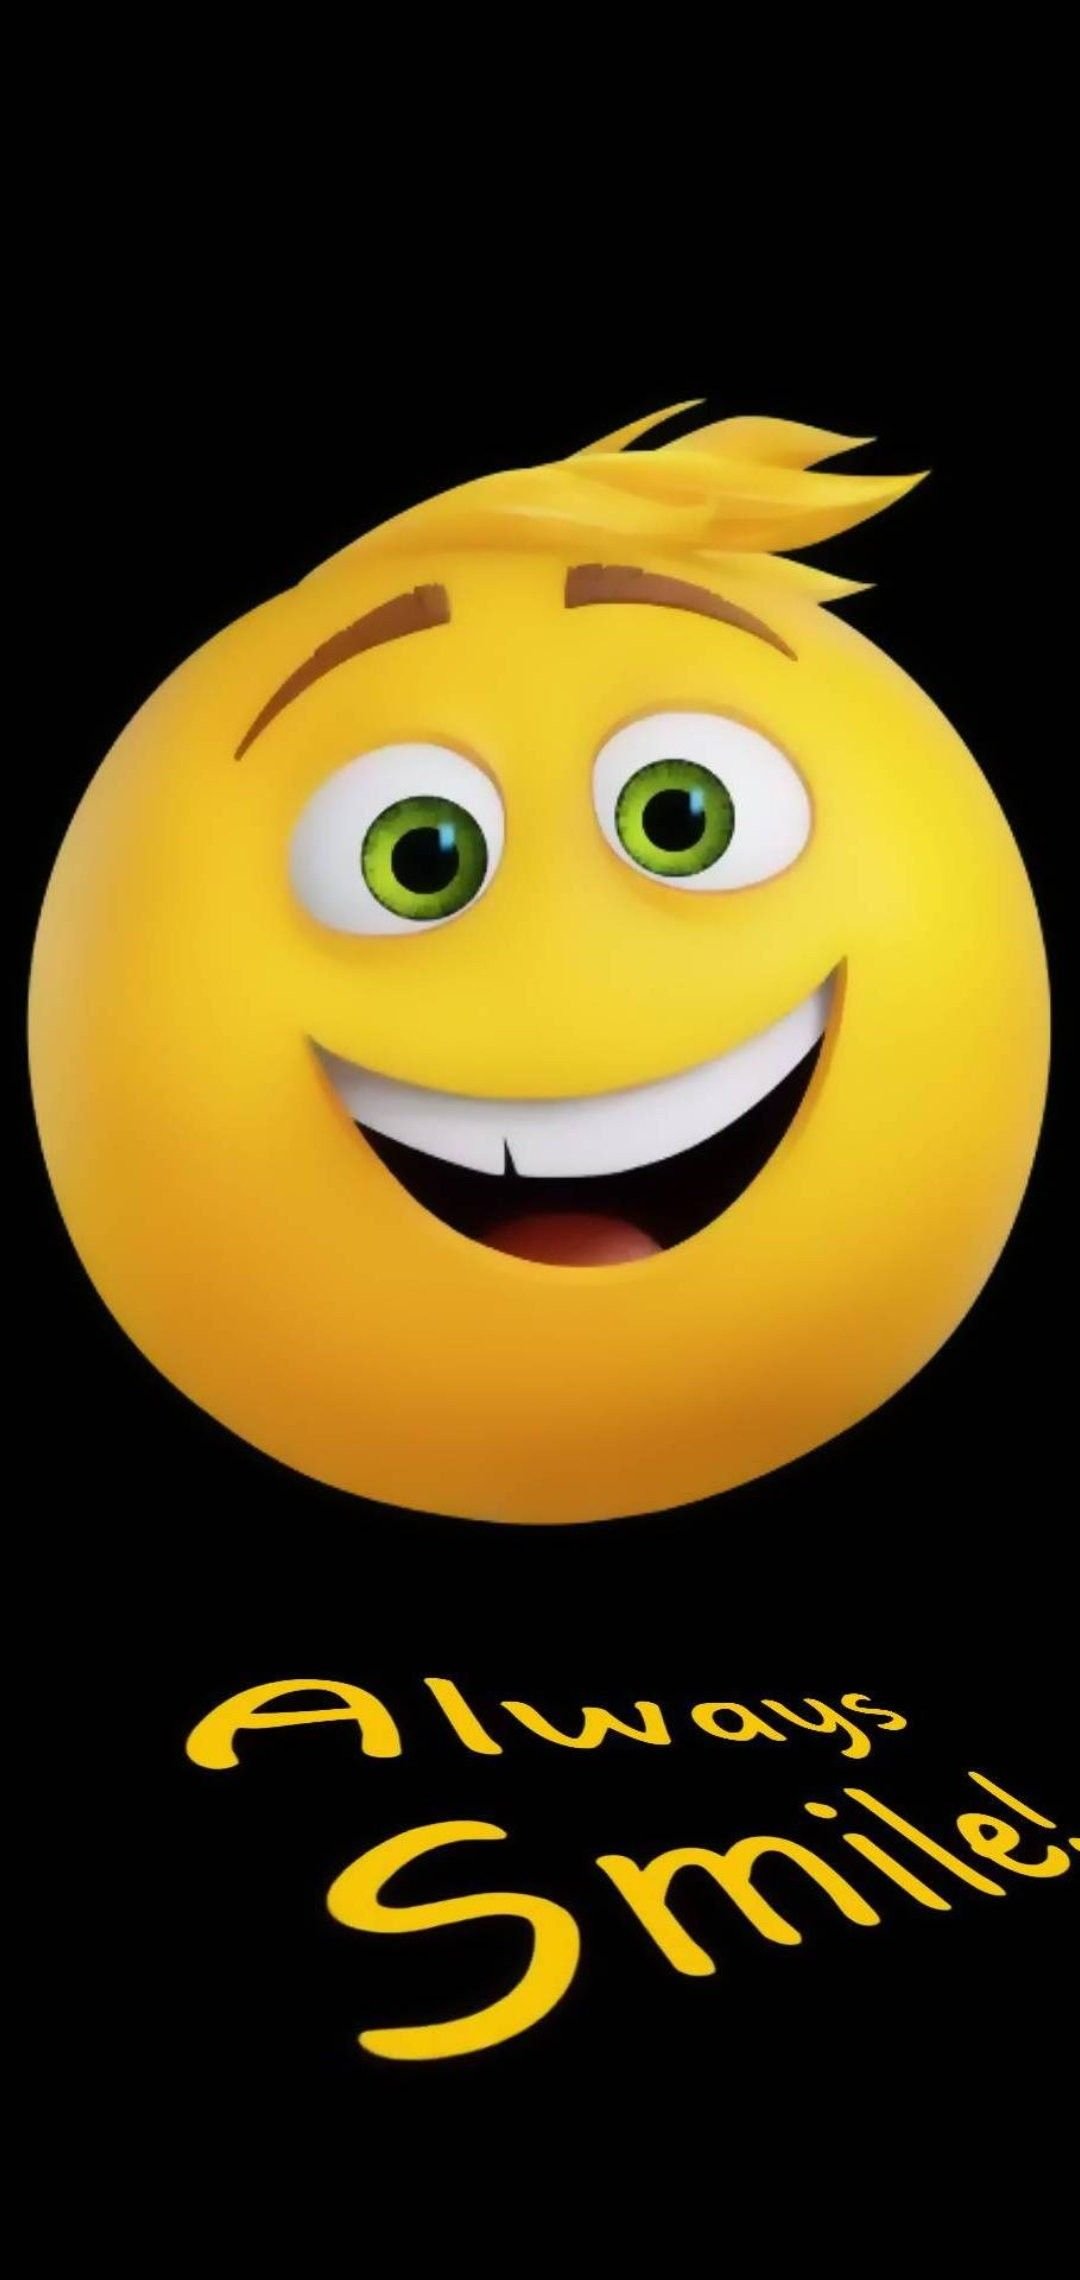 Always smile emoji